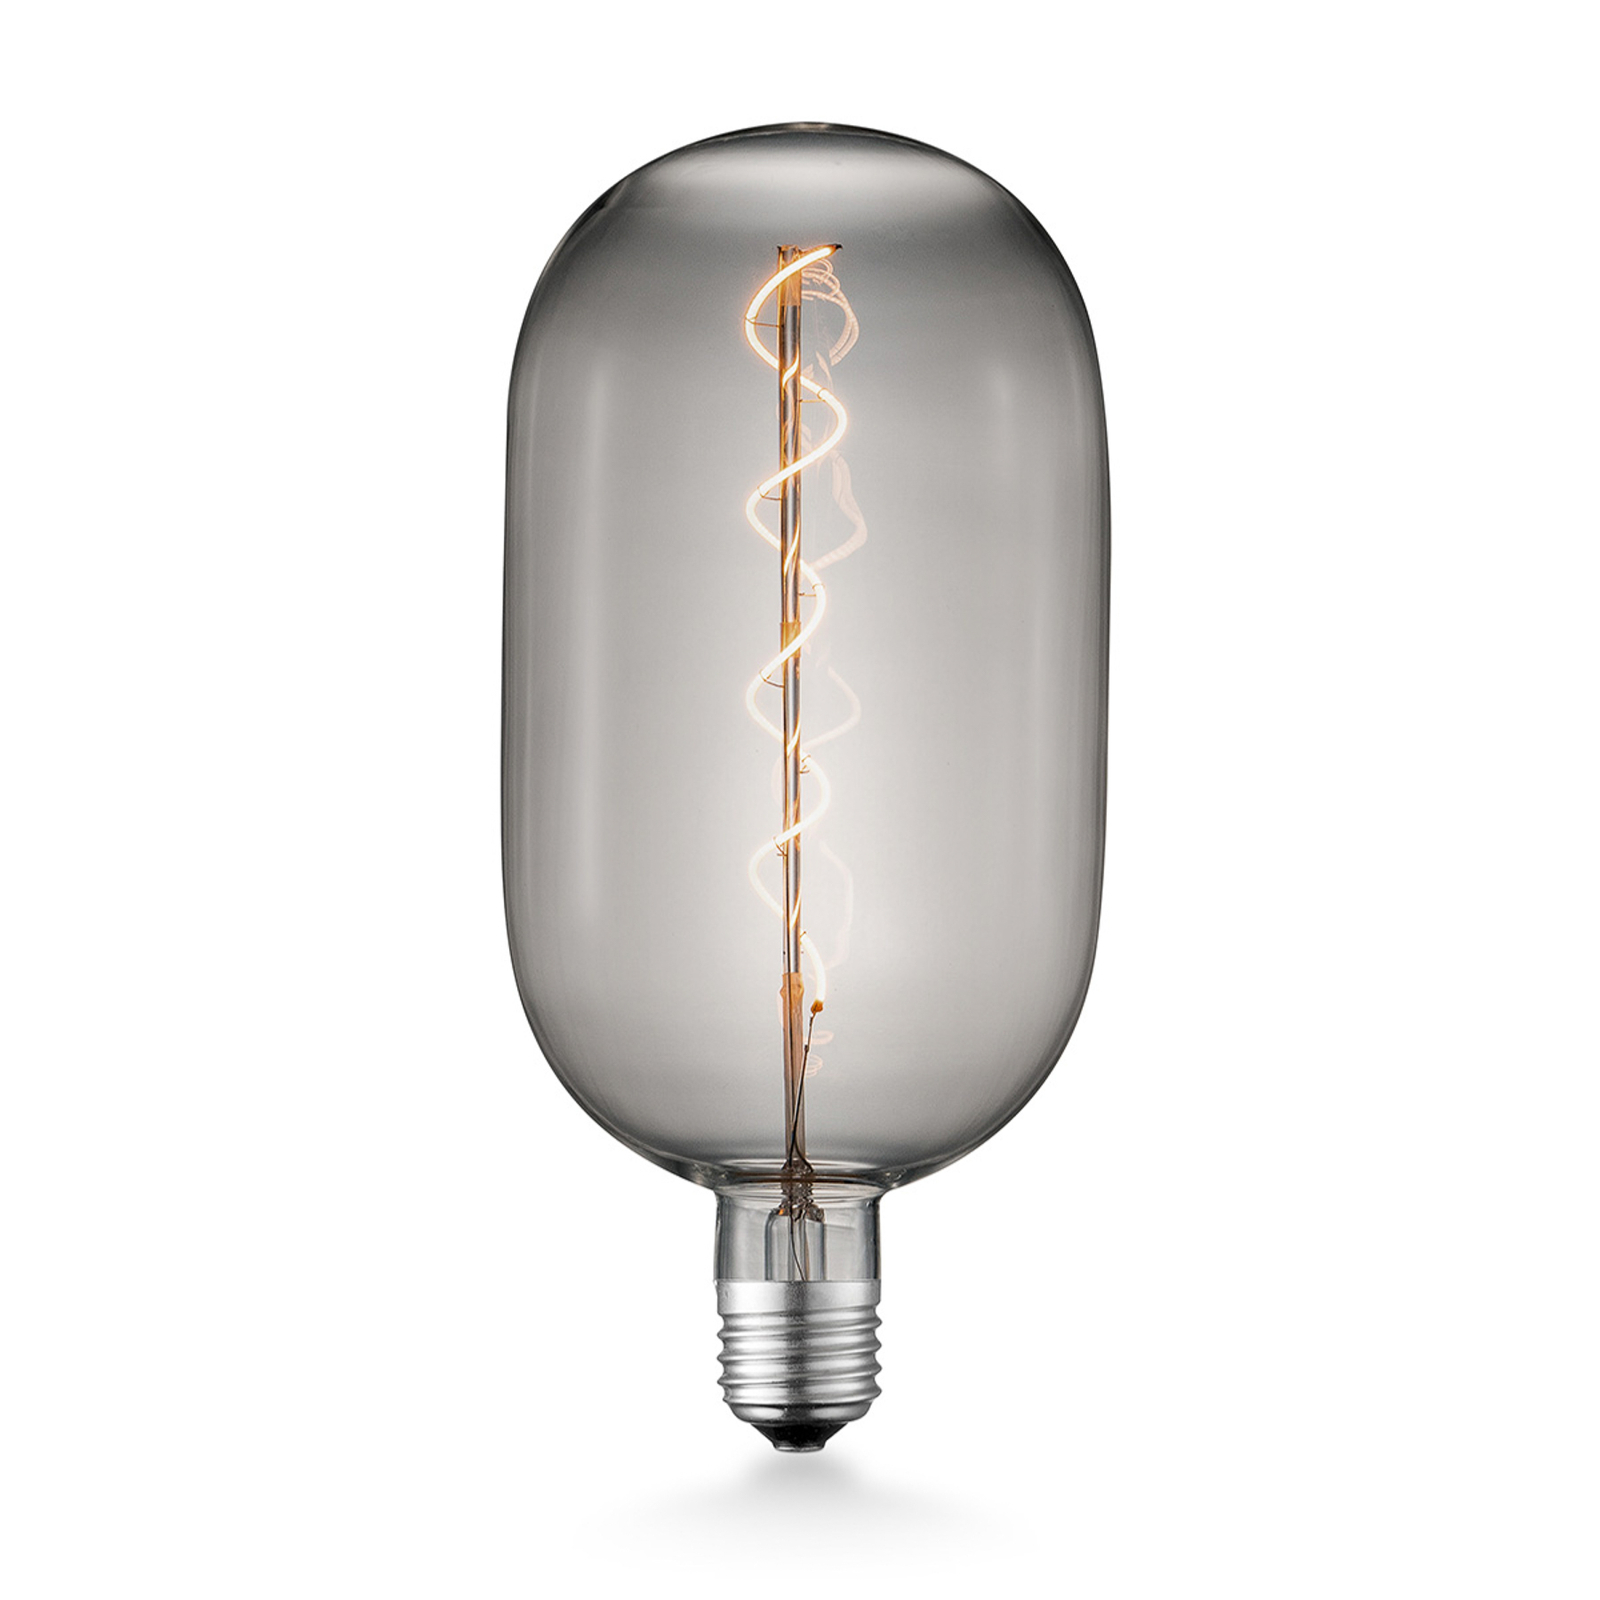 Lucande LED-Lampe E27 T140 4W 1.800K dimmbar smoke